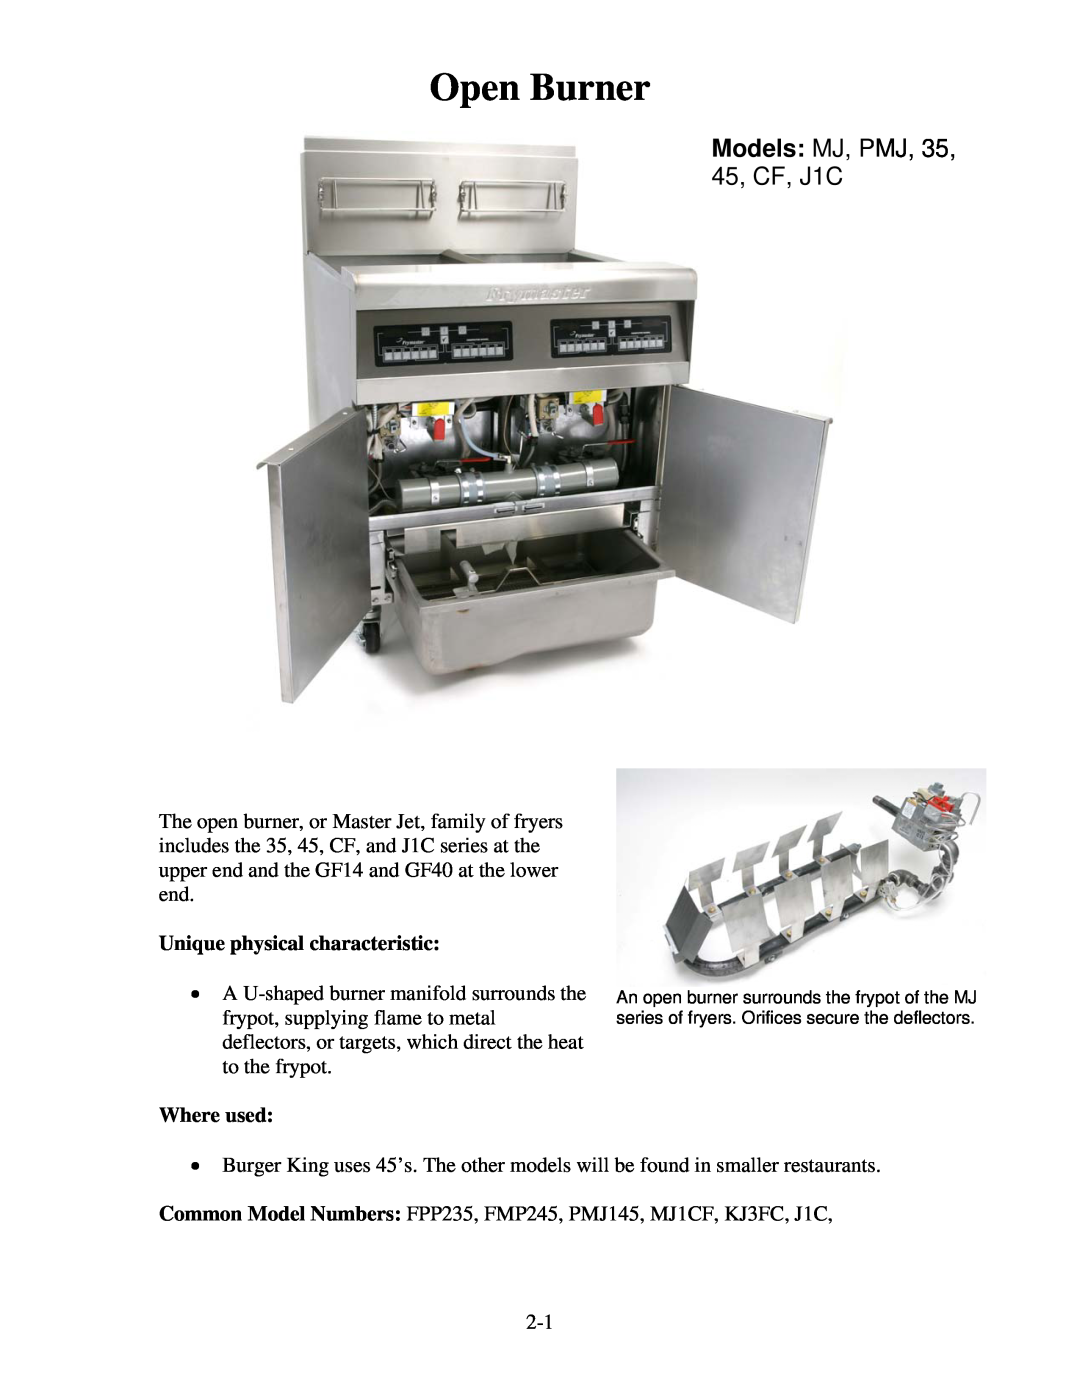 Frymaster 8196321 manual Open Burner, Models MJ, PMJ, 35, 45, CF, J1C 